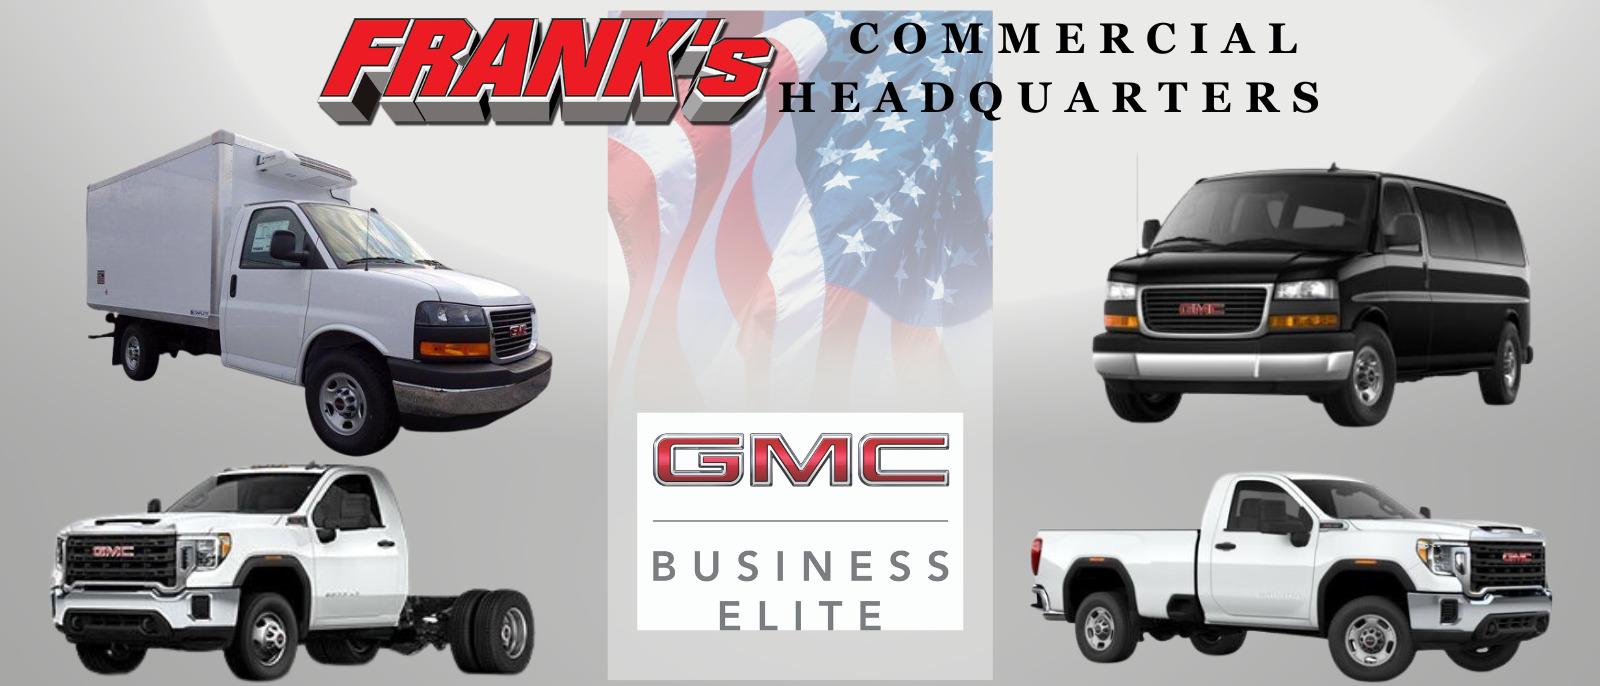 GMC business elite trucks